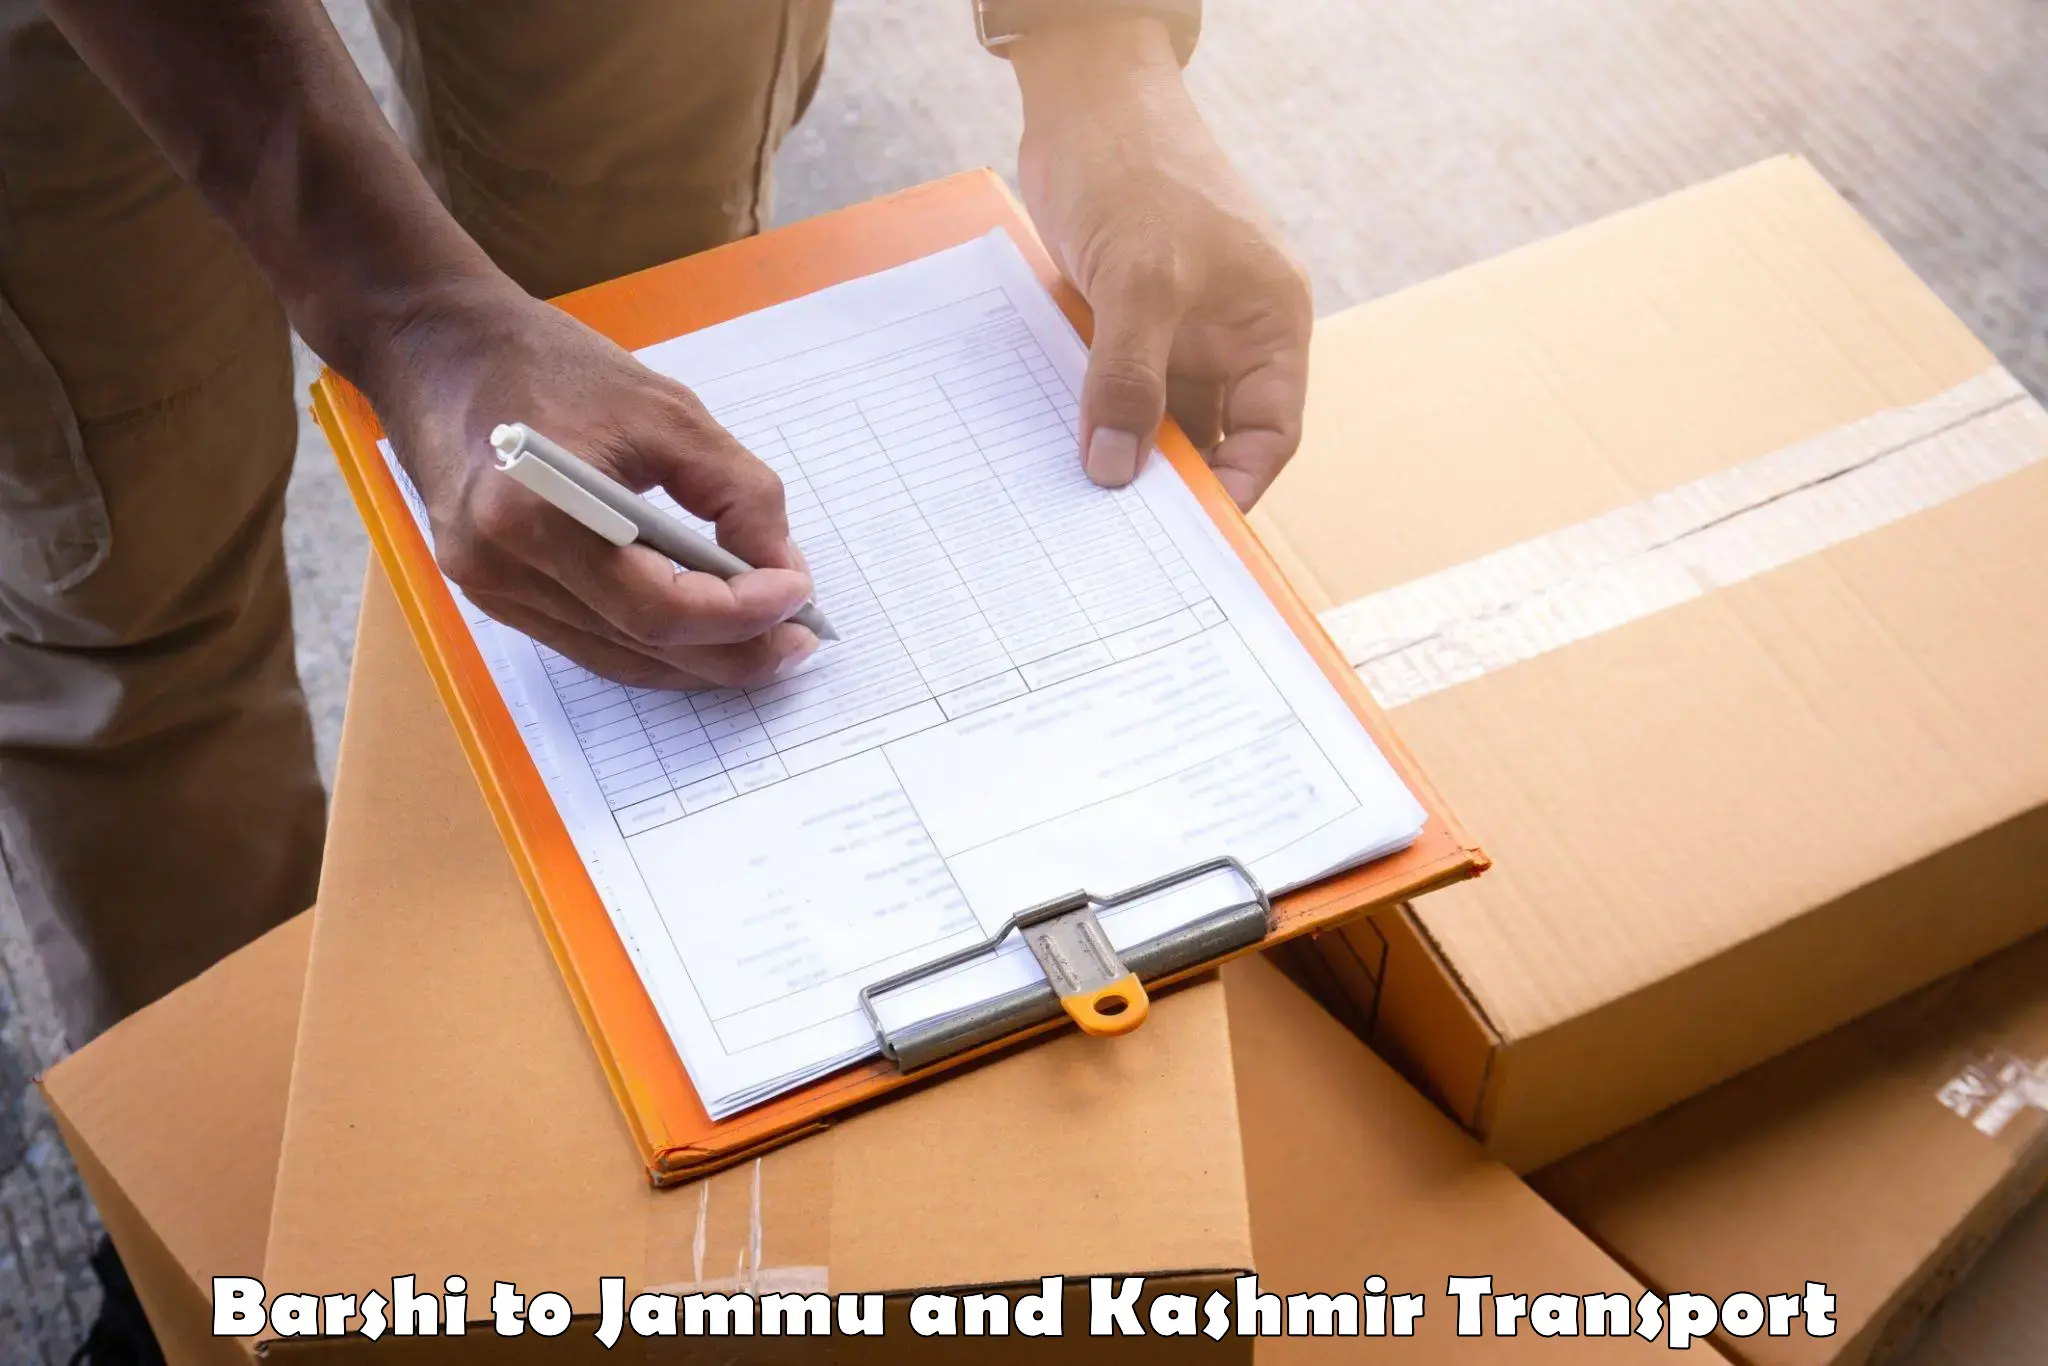 Truck transport companies in India Barshi to Kargil